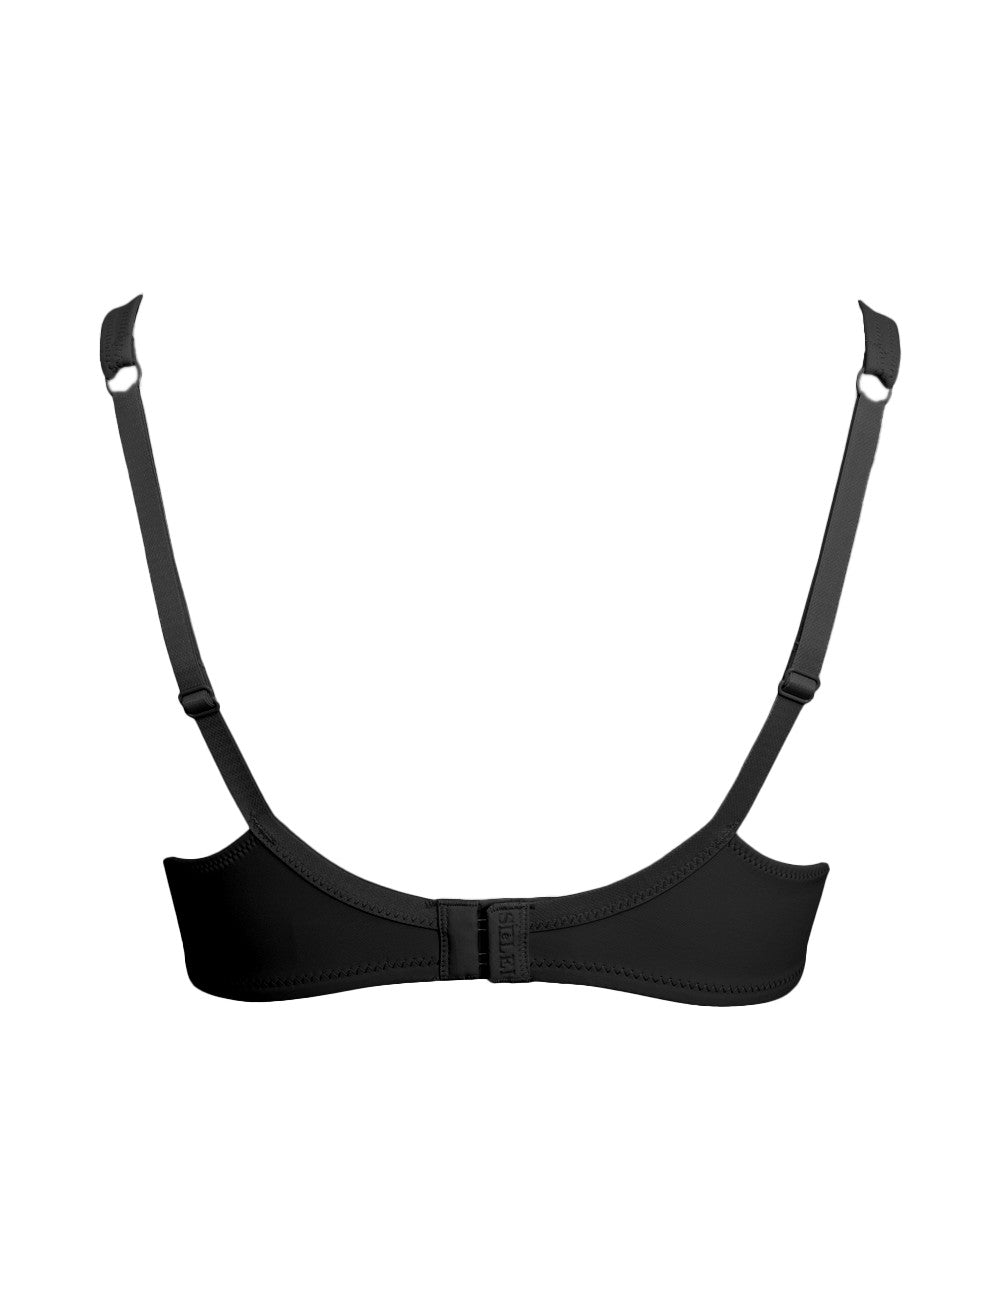 Cacique Sexy Black Bra 44D Smooth Cups Underwire 118641 w/Adjustable Straps  